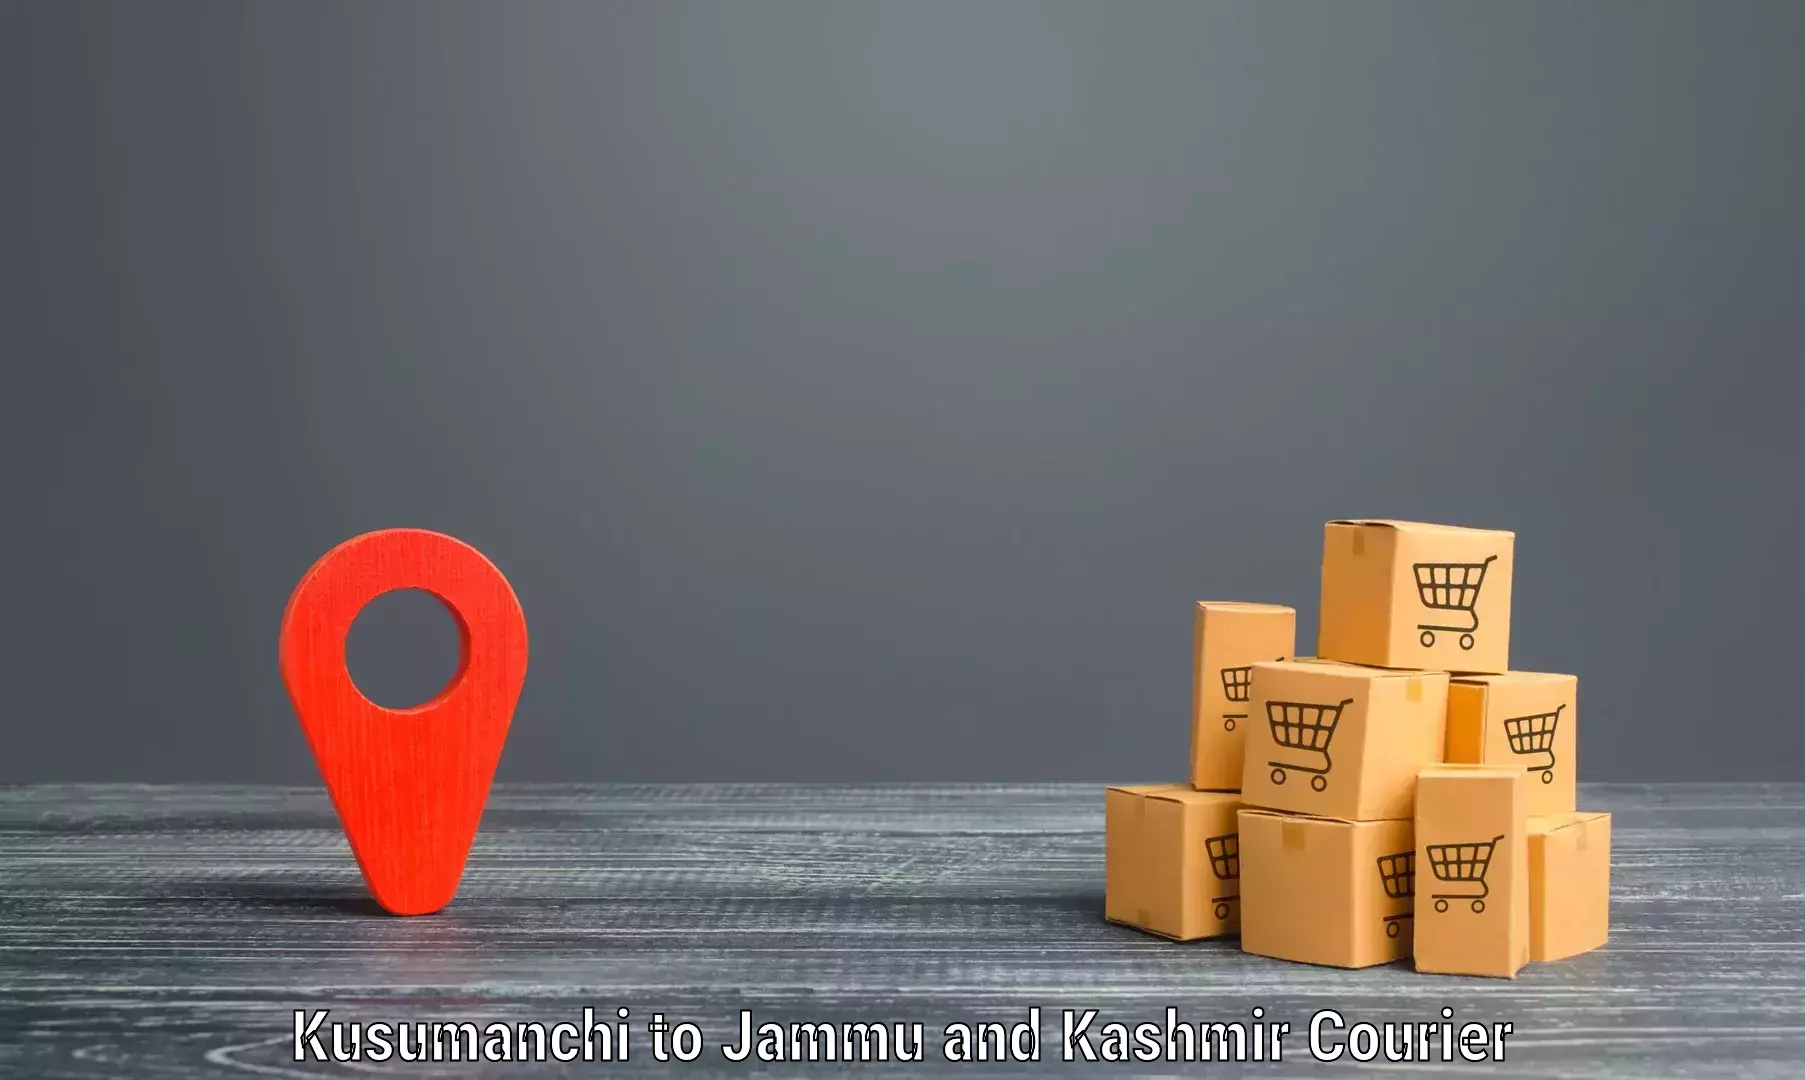 Emergency parcel delivery in Kusumanchi to Kulgam